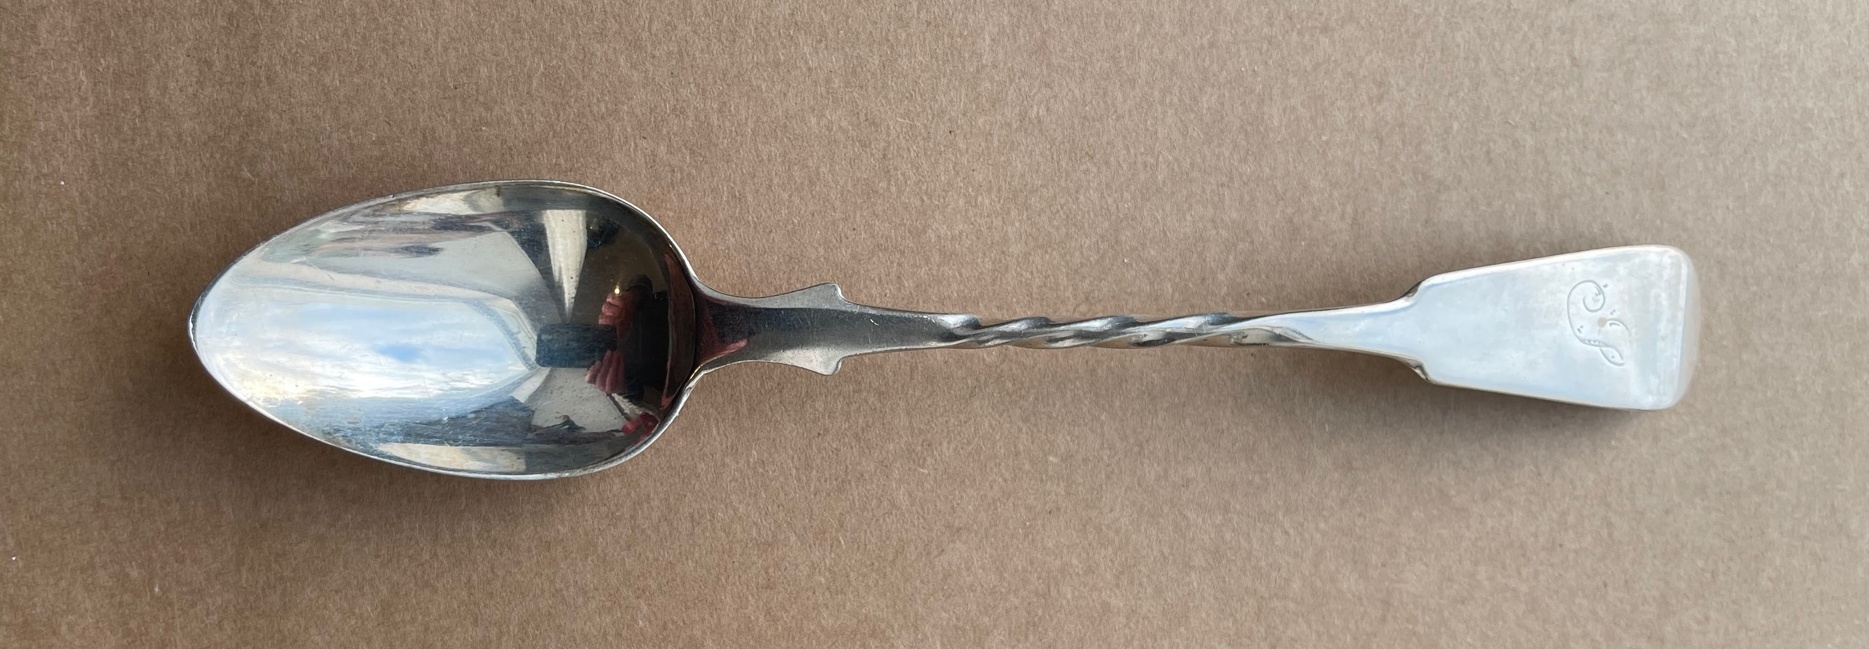 Scottish Provincial Donald Fraser - Inverness - Silver Masking Spoon - 6 3/4" long - 25g. - Image 2 of 6